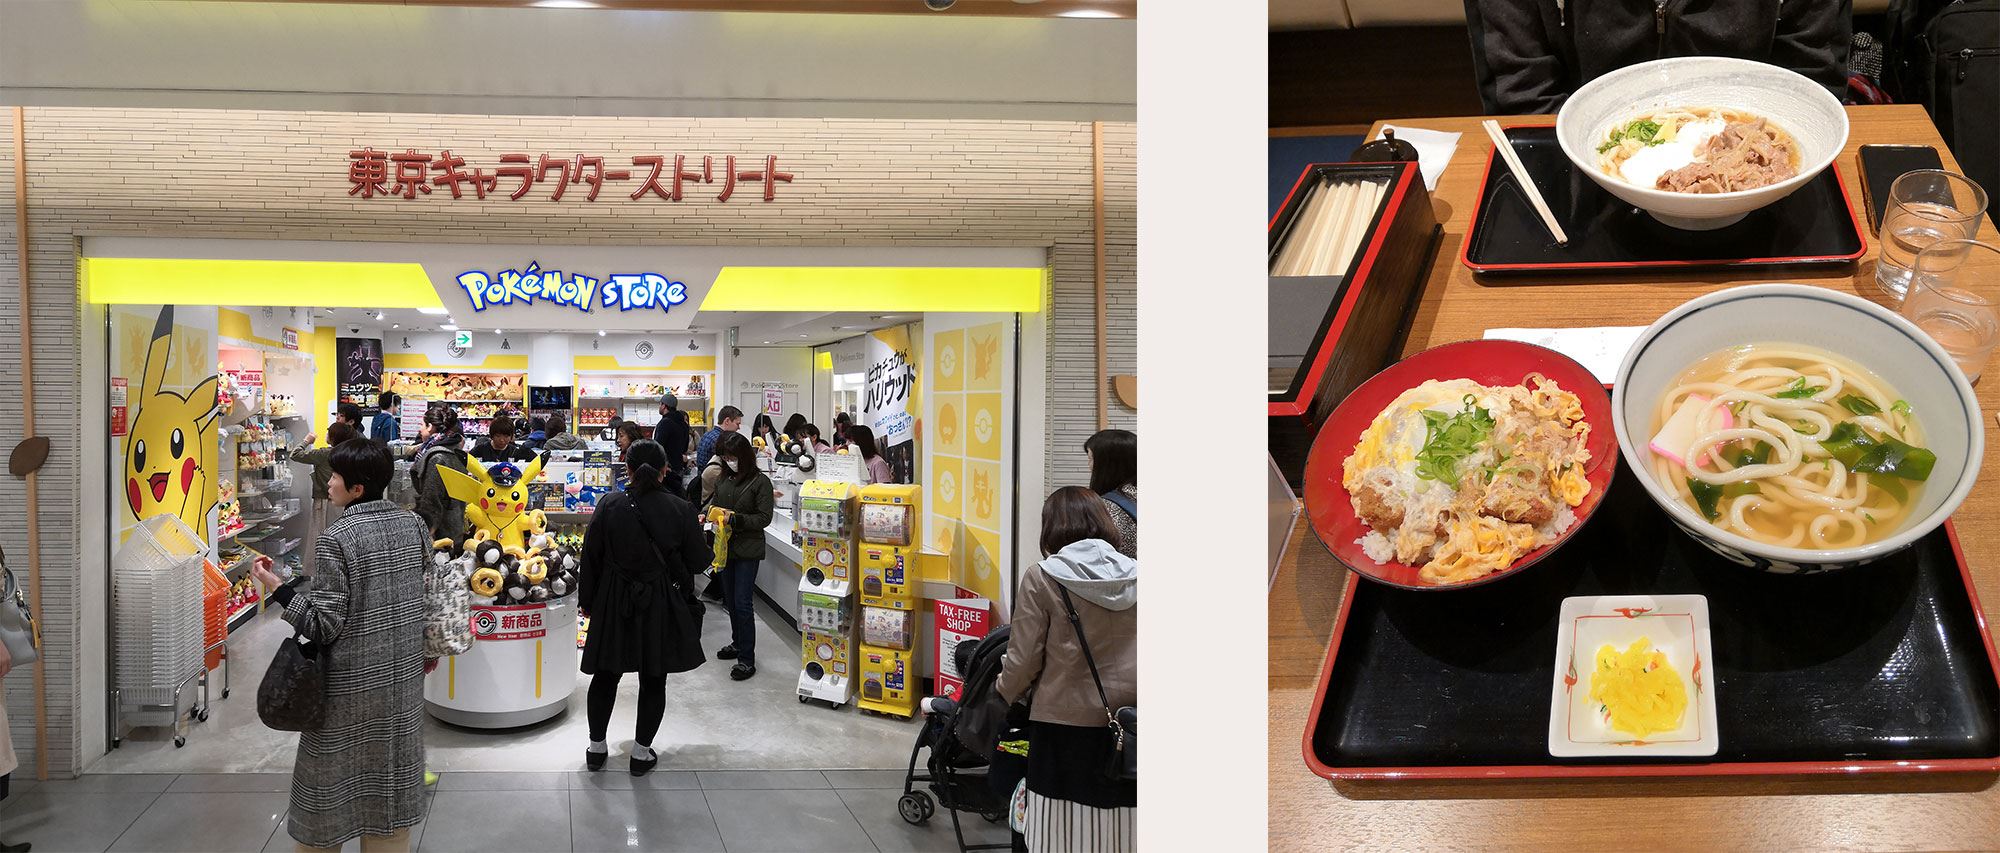 Pokemon Store & dégustation de Udons dans la Ramen Street